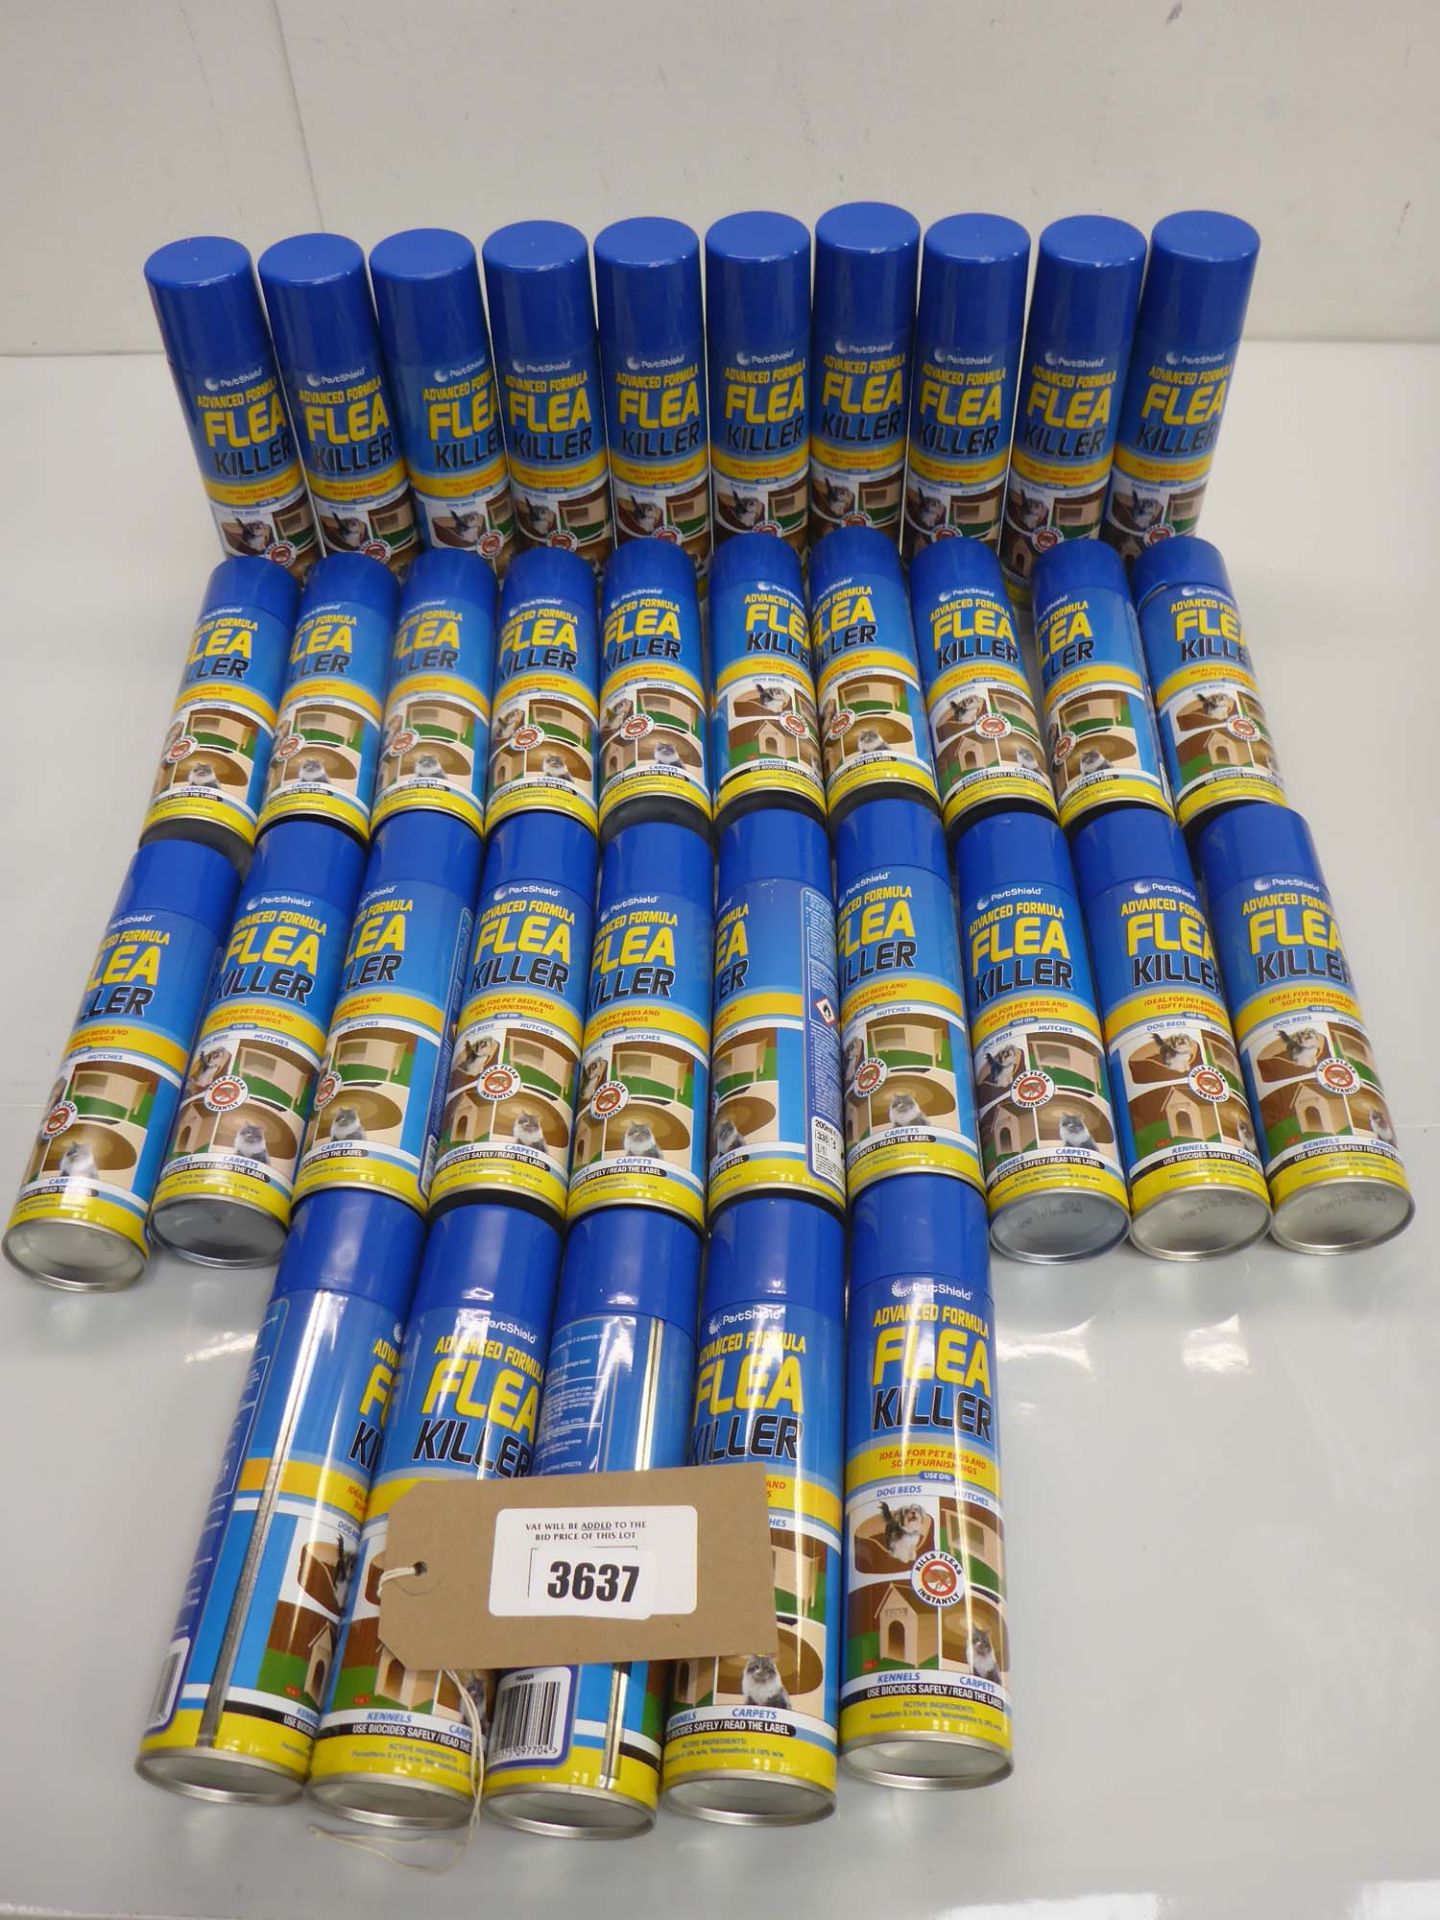 35 cans of PestShield Advanced Formula Flea killer